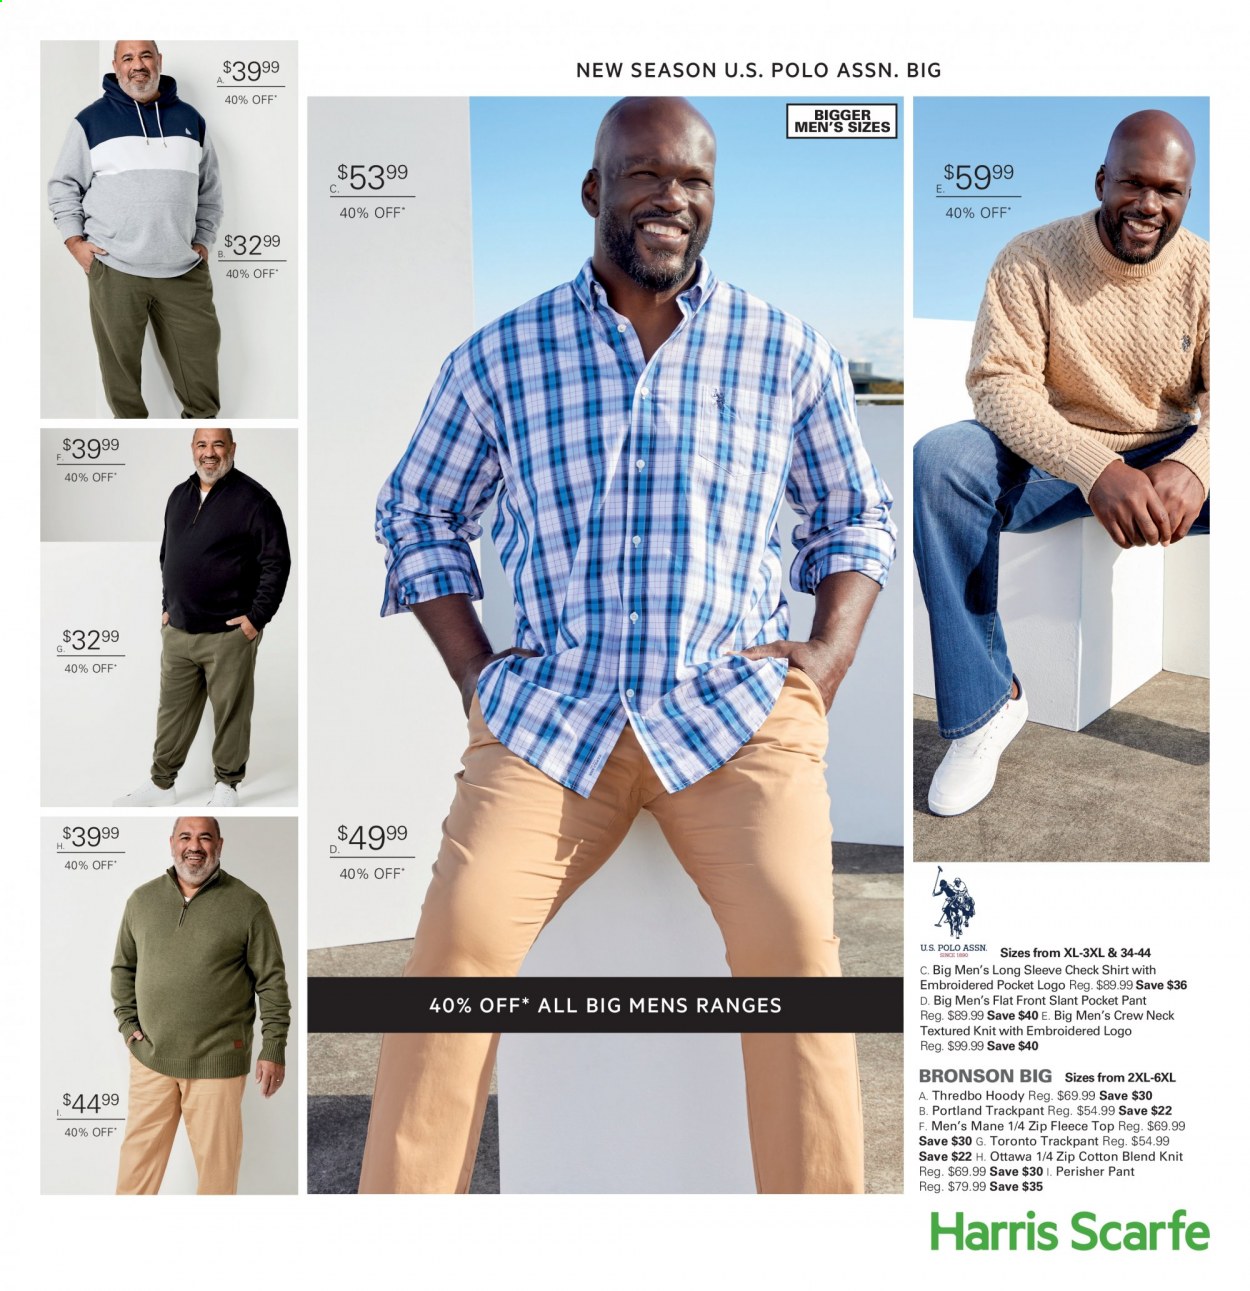 Harris Scarfe catalogue.